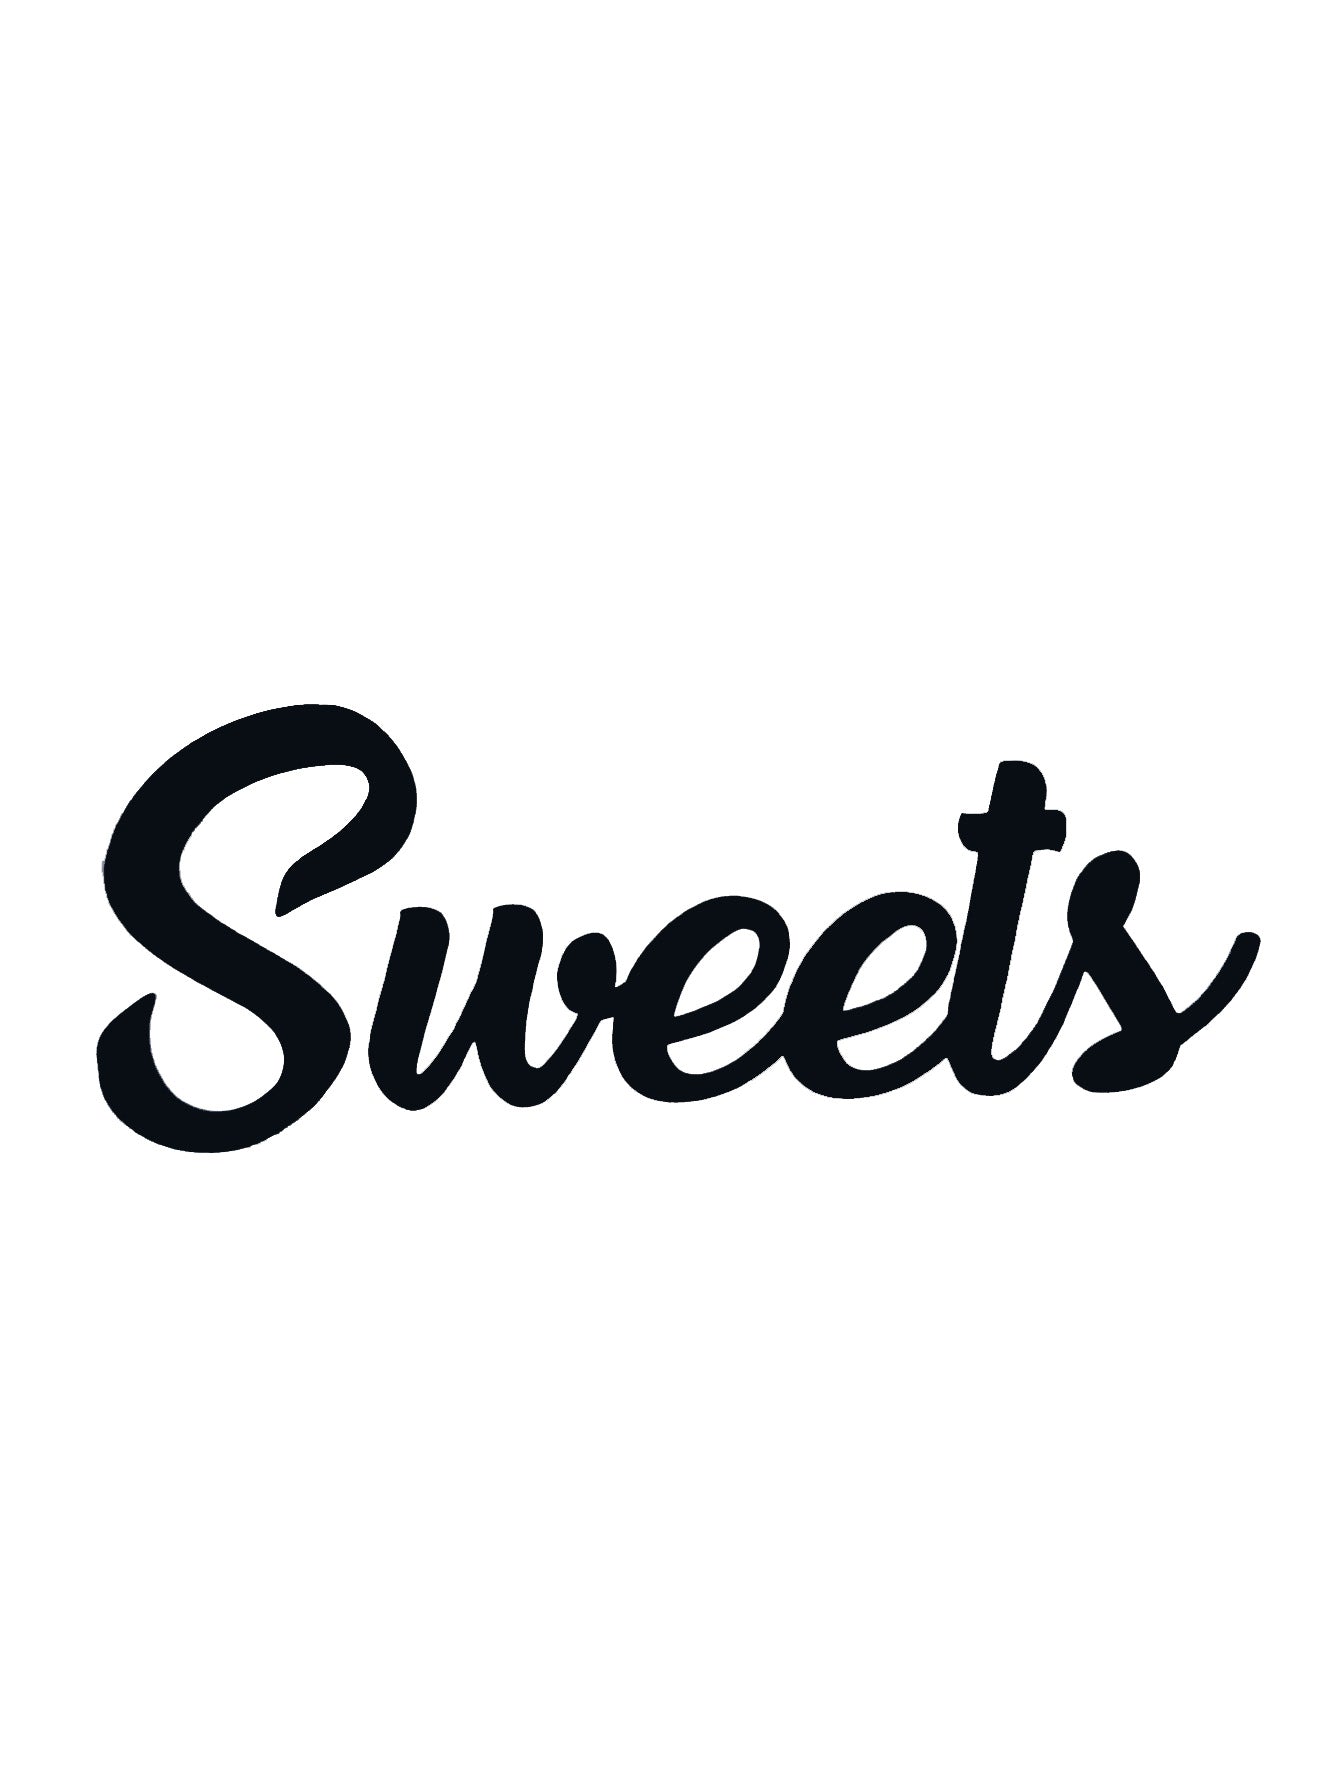 Sweets Kitchen Decal - Vinyl Sticker Decal